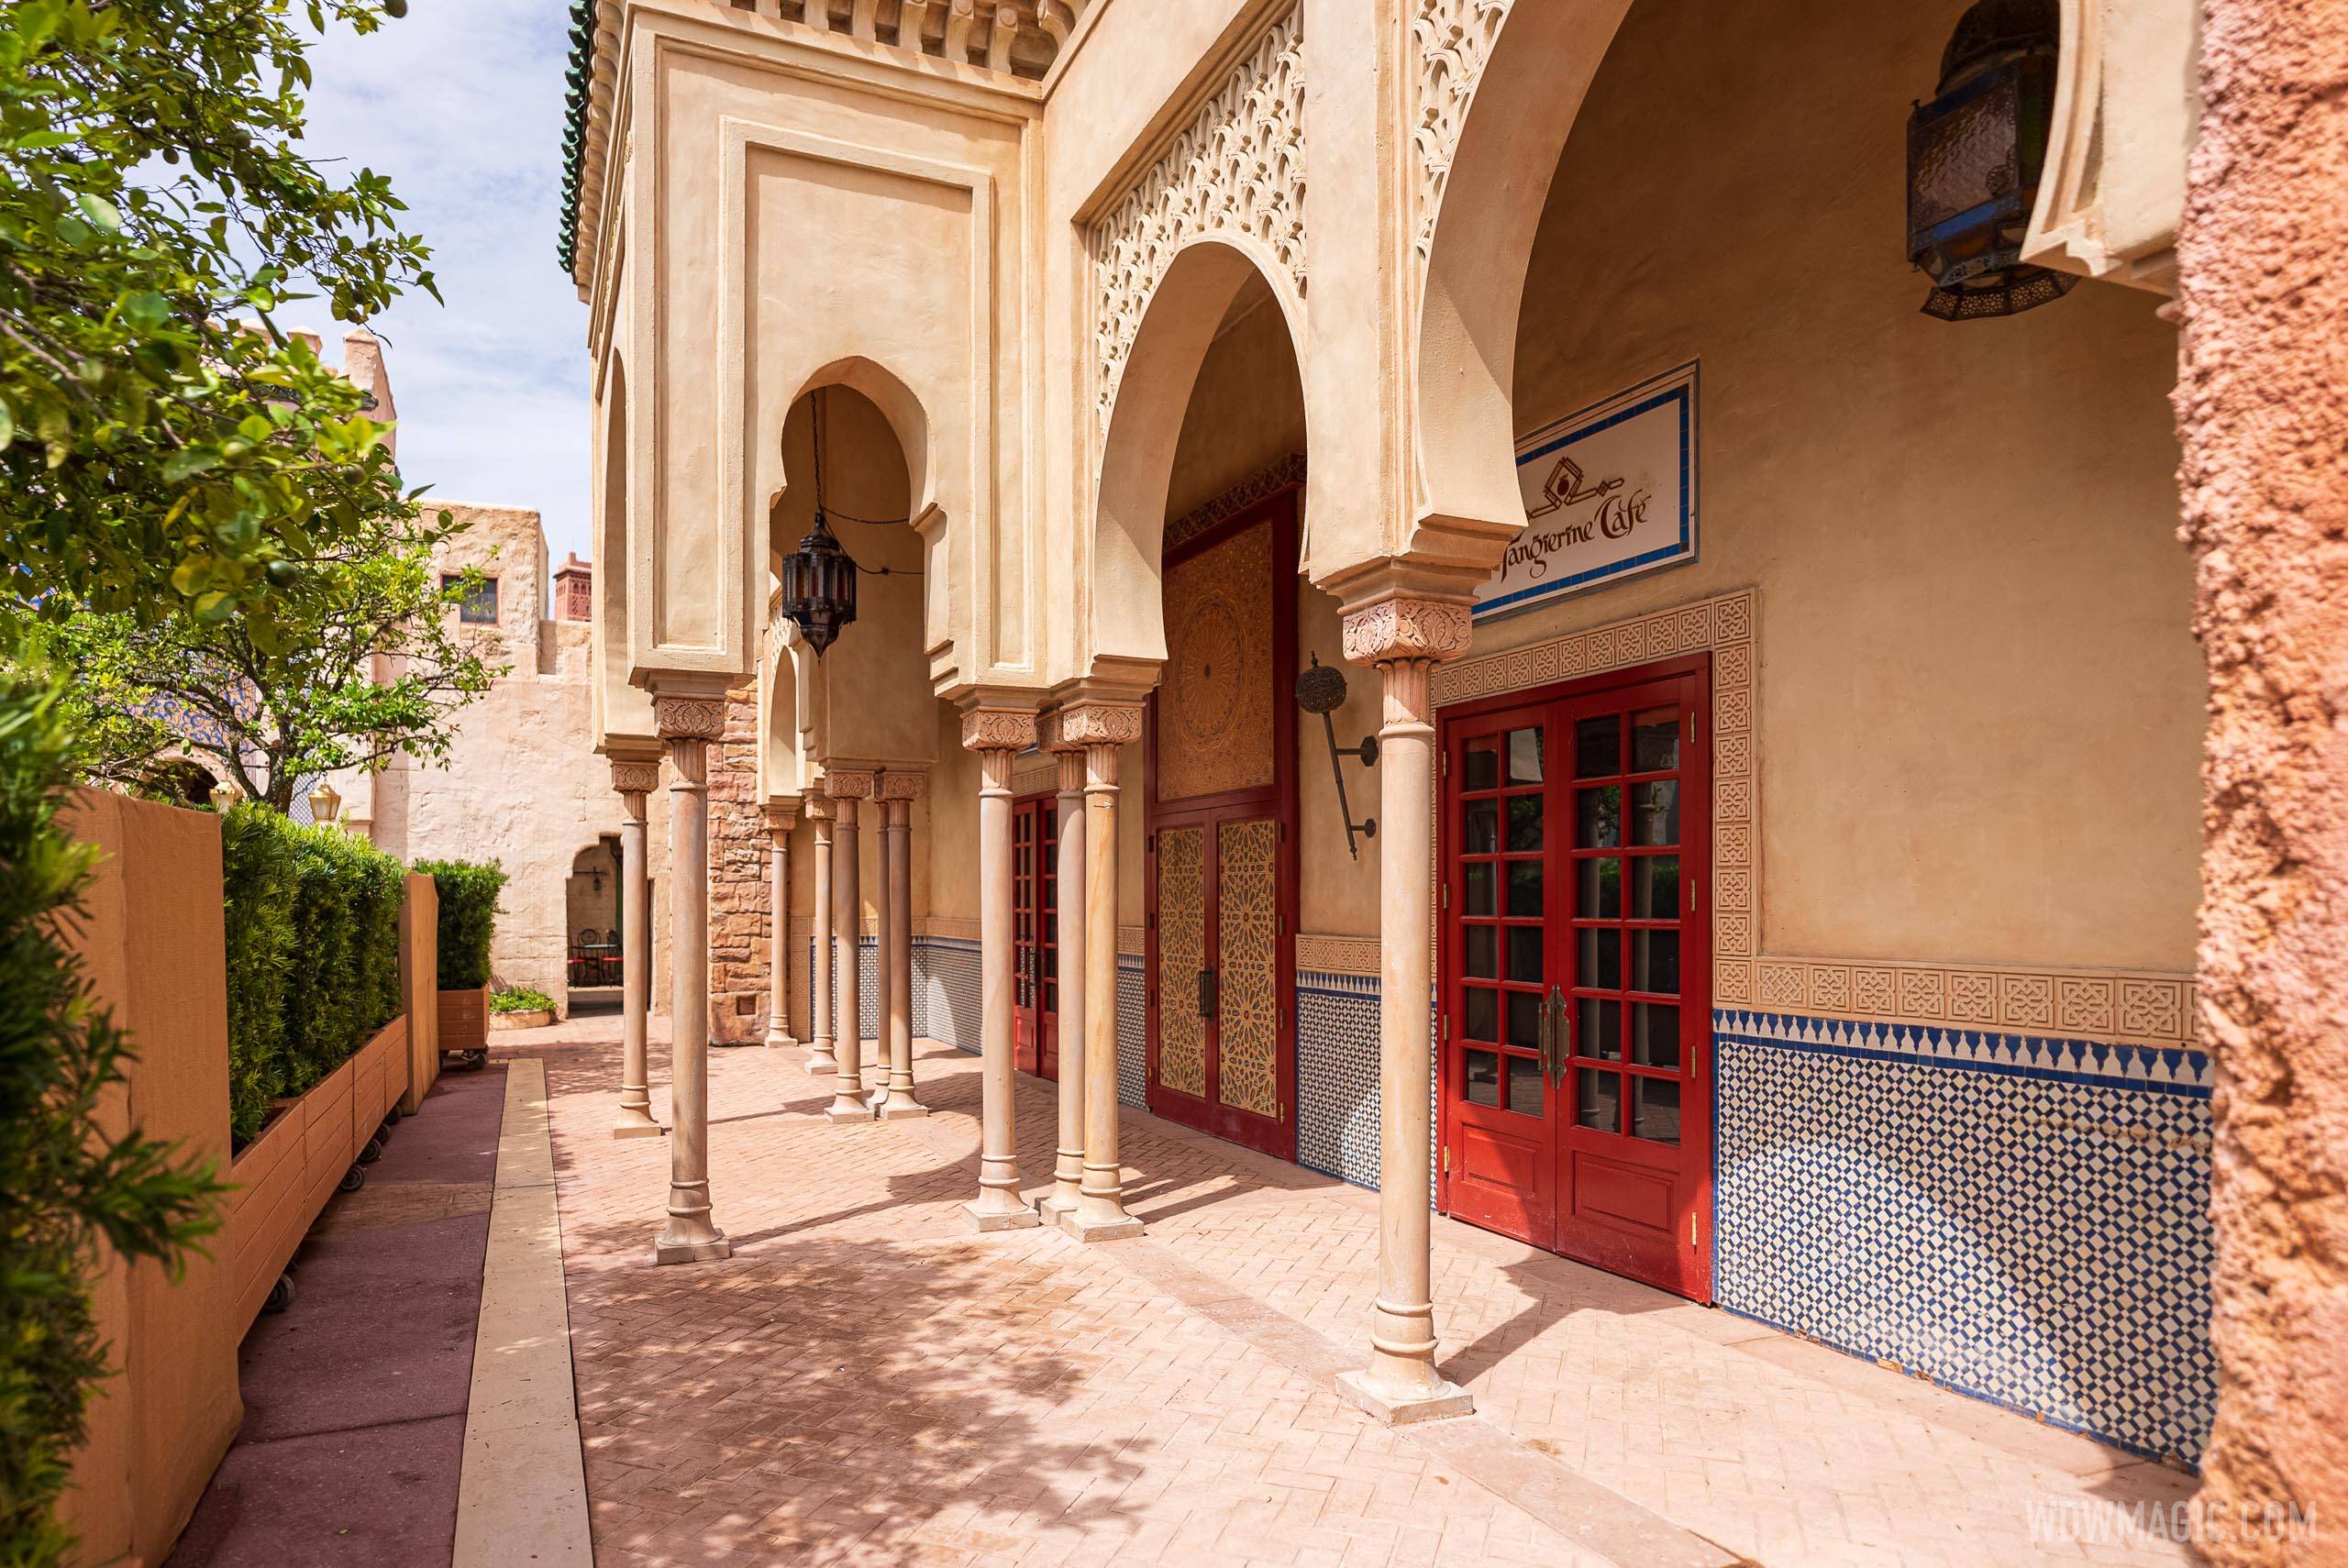 Tangierine Cafe and Morocco Pavilion area refurbishment - June 23 2021